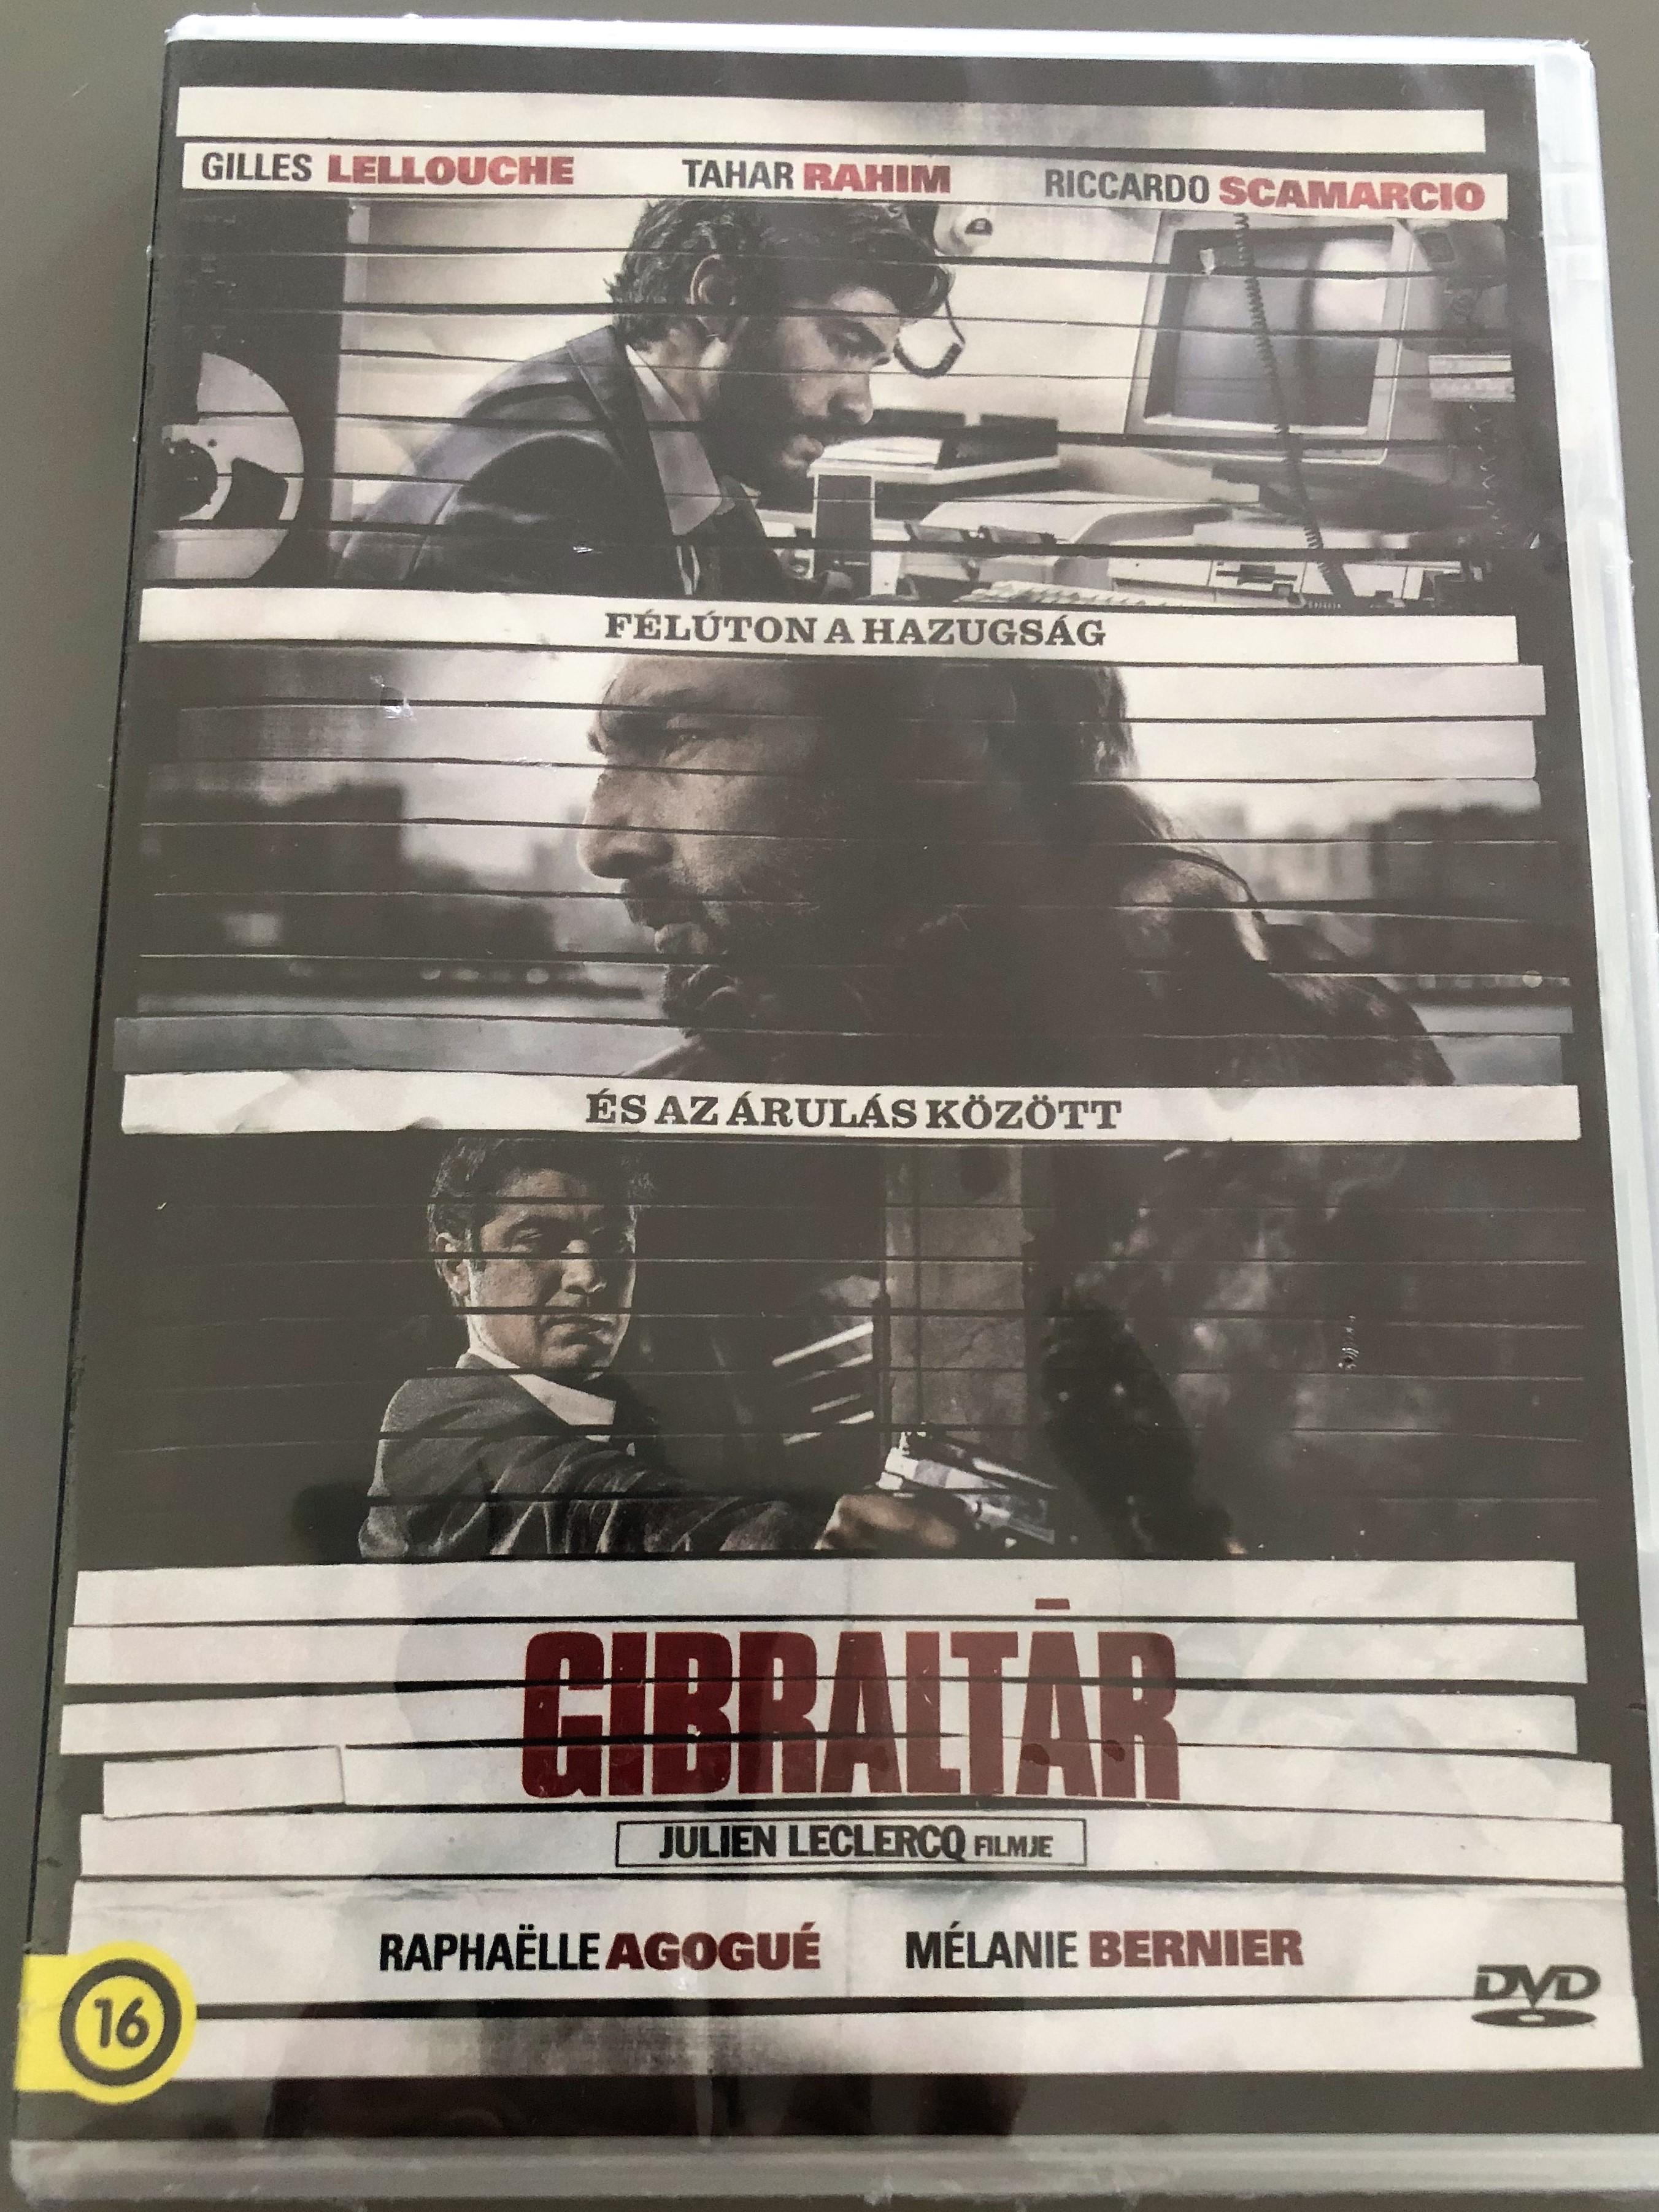 gibraltar-dvd-2013-gibralt-r-the-informant-directed-by-julien-leclercq-starring-gilles-lellouche-tahar-rahim-riccardo-scamarcio-elizabeth-rohm-peter-berg-1-.jpg